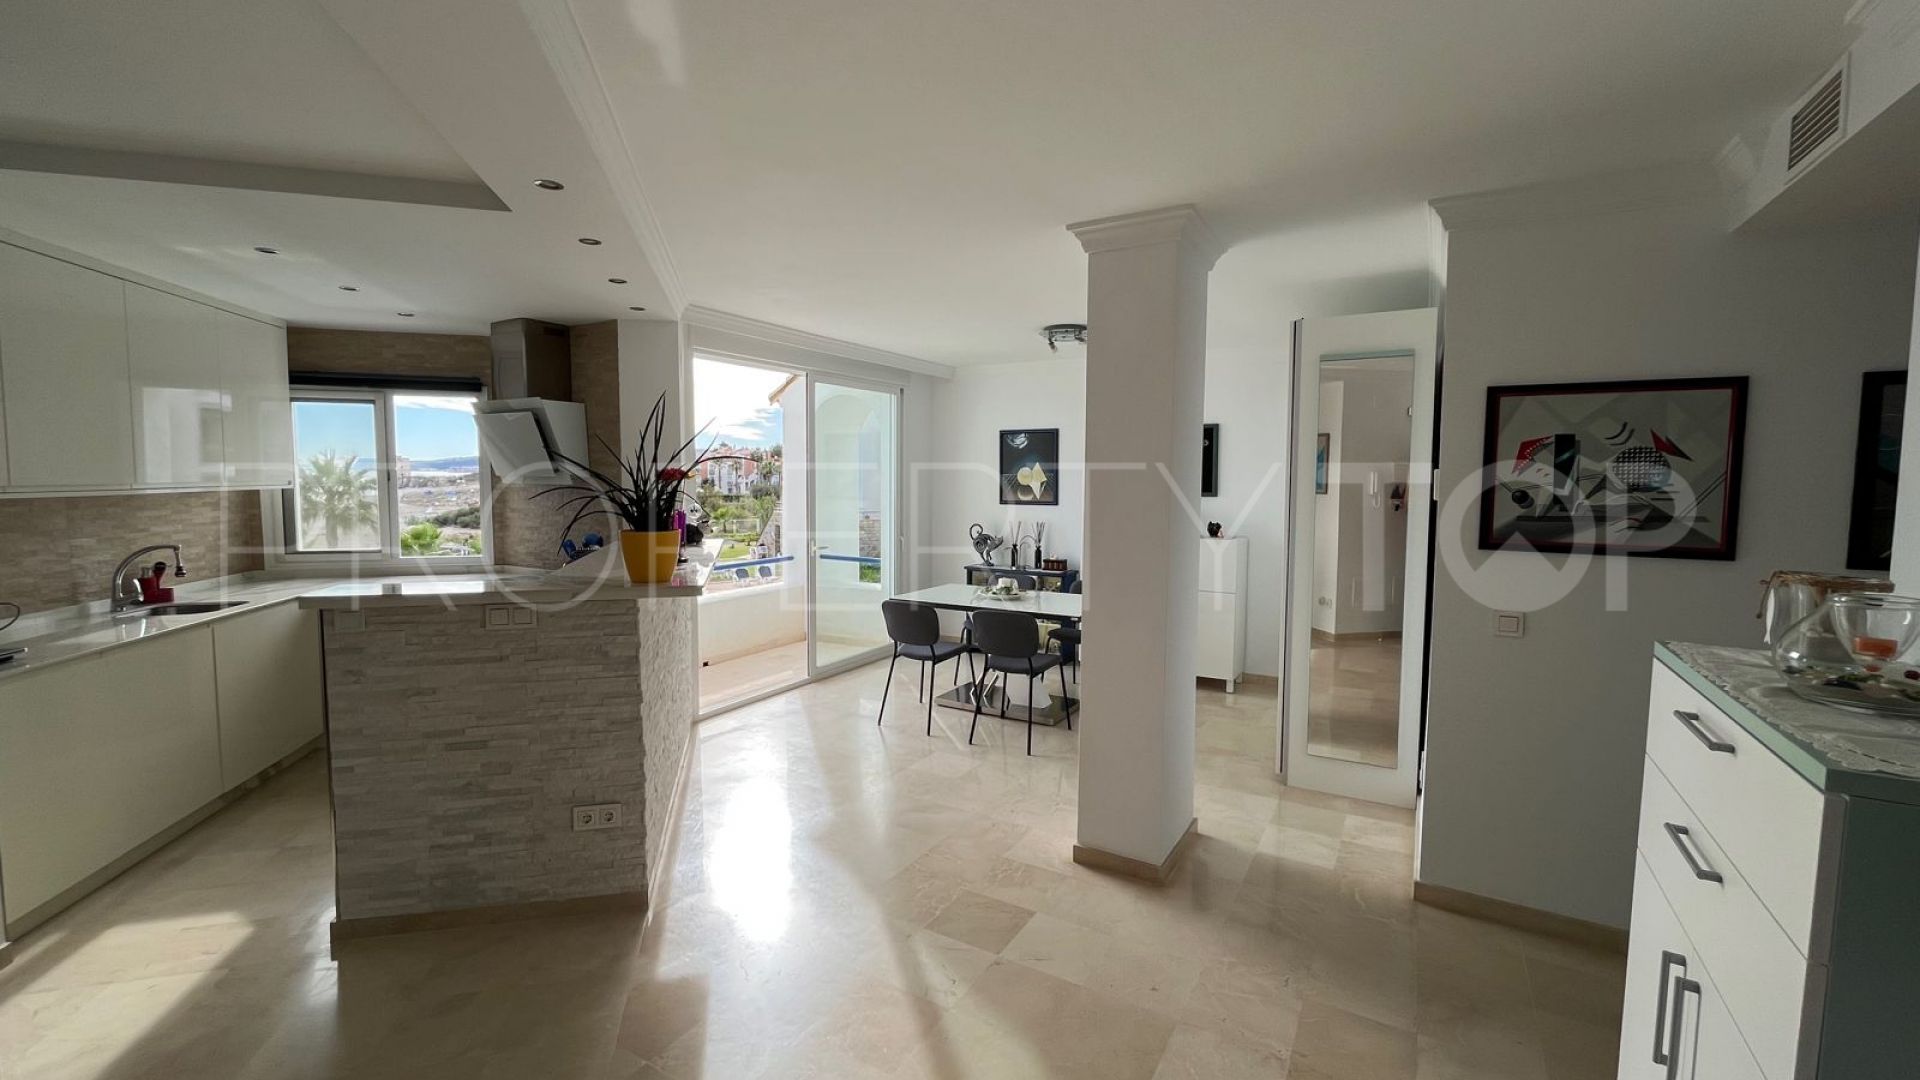 Apartment for sale in Casares del Mar